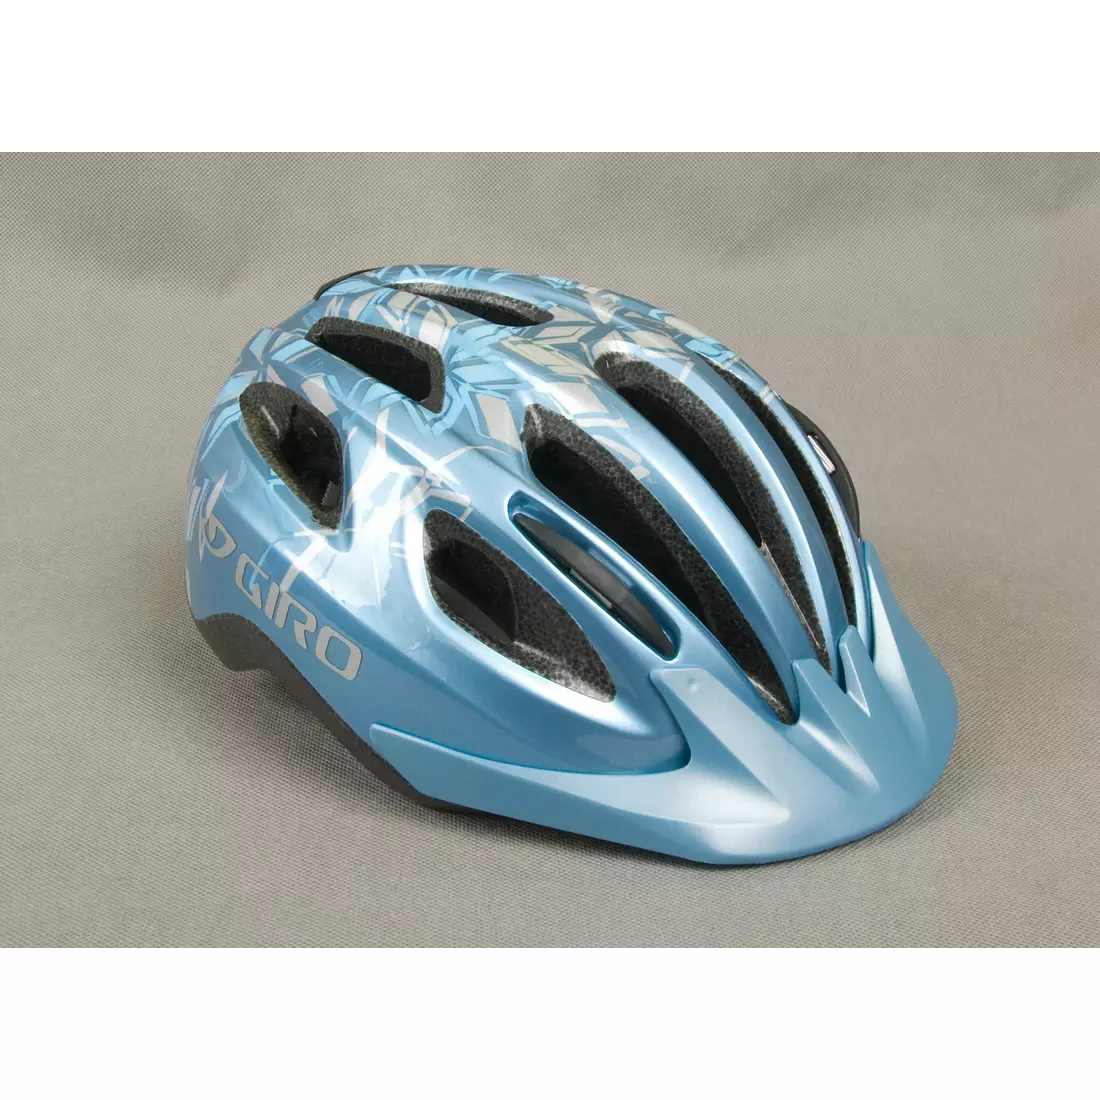 GIRO VENUS II Damen-Fahrradhelm, Farbe: Blau und Weiß